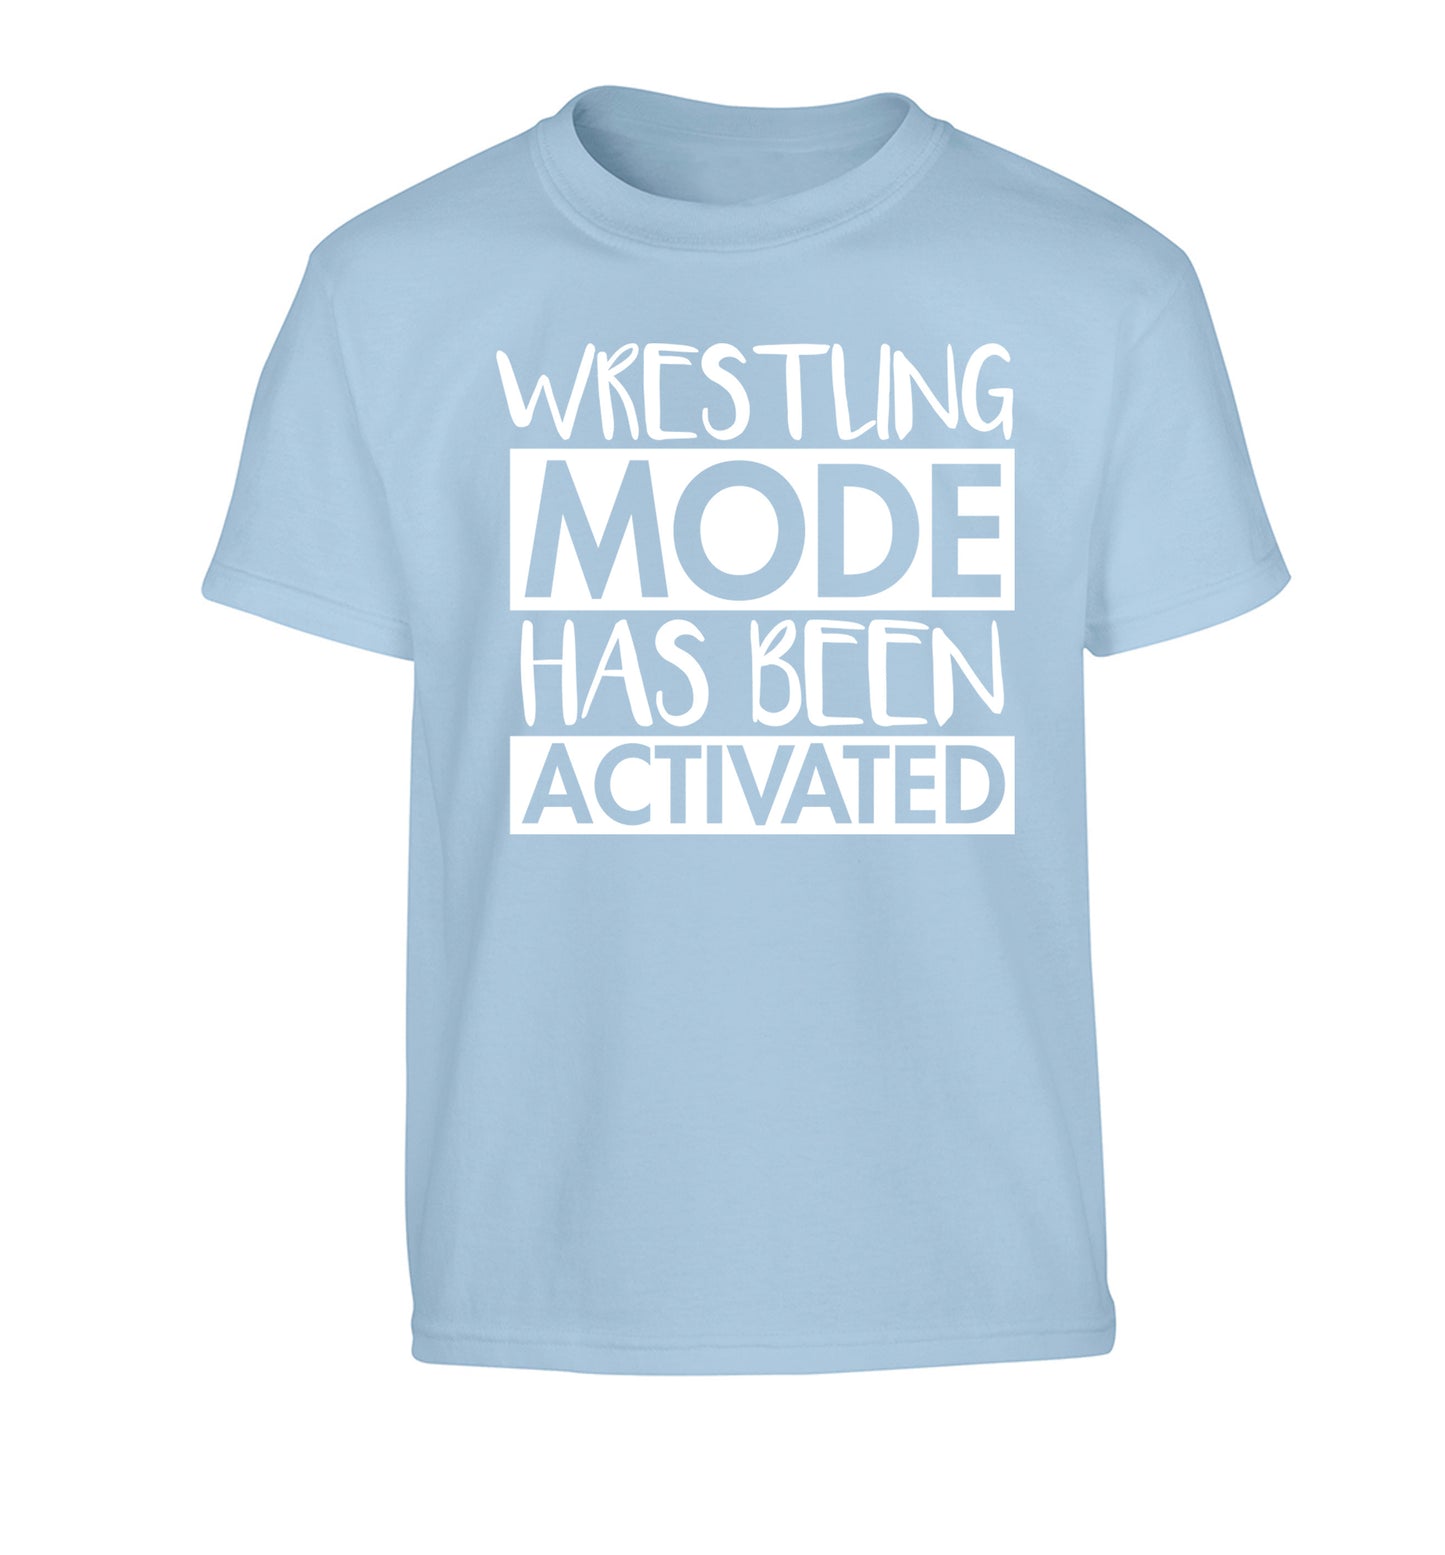 Wresting mode activated Children's light blue Tshirt 12-14 Years